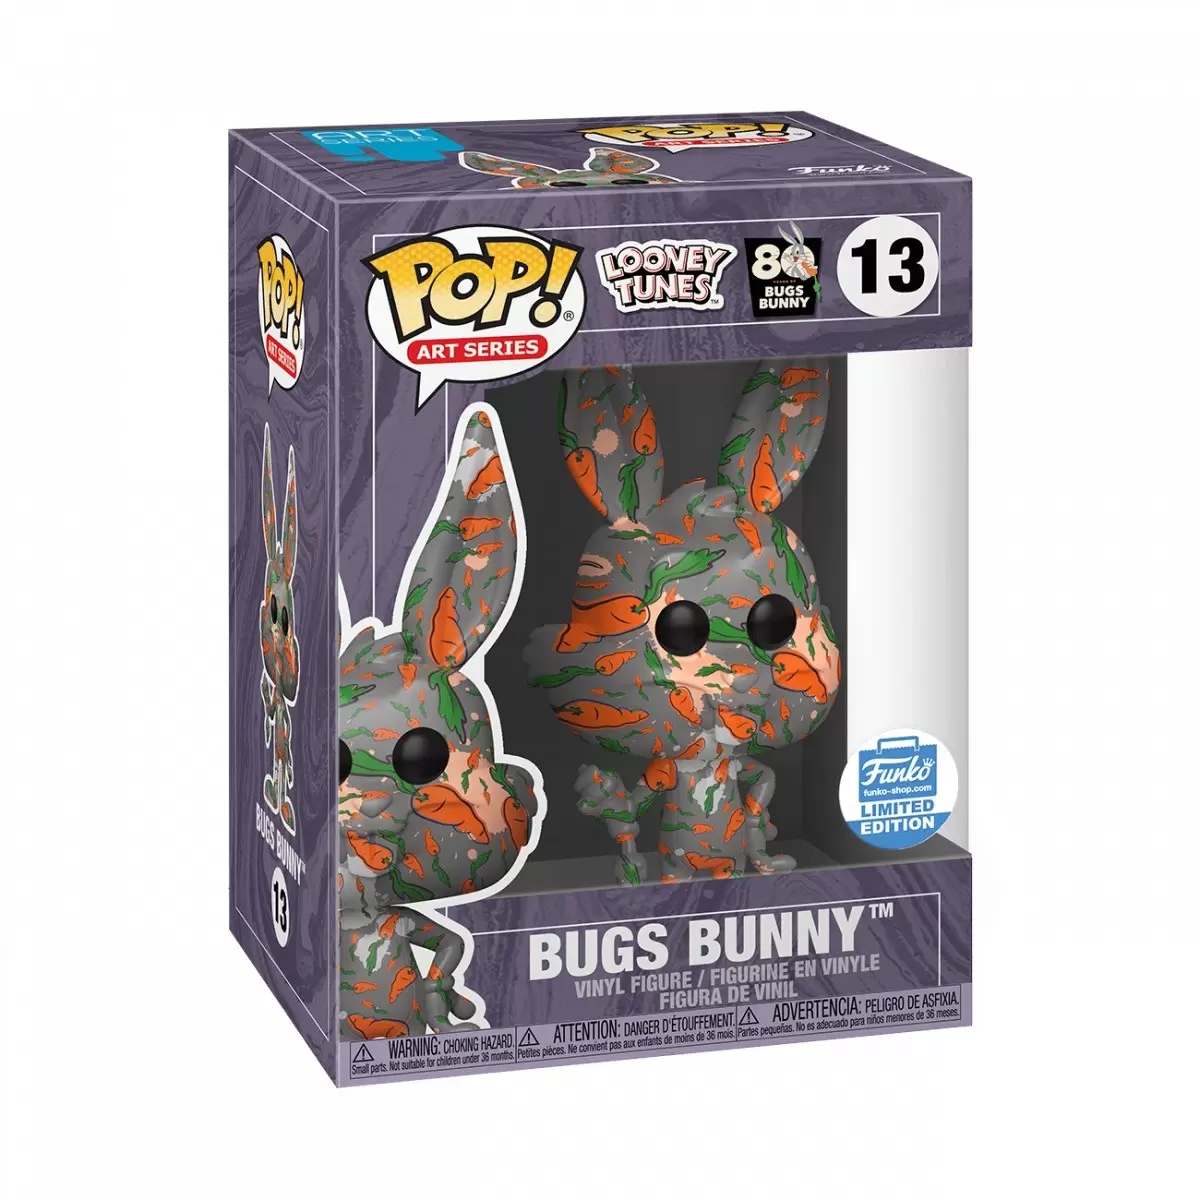 POP! Art Series - Looney Tunes - Bugs Bunny Art Series